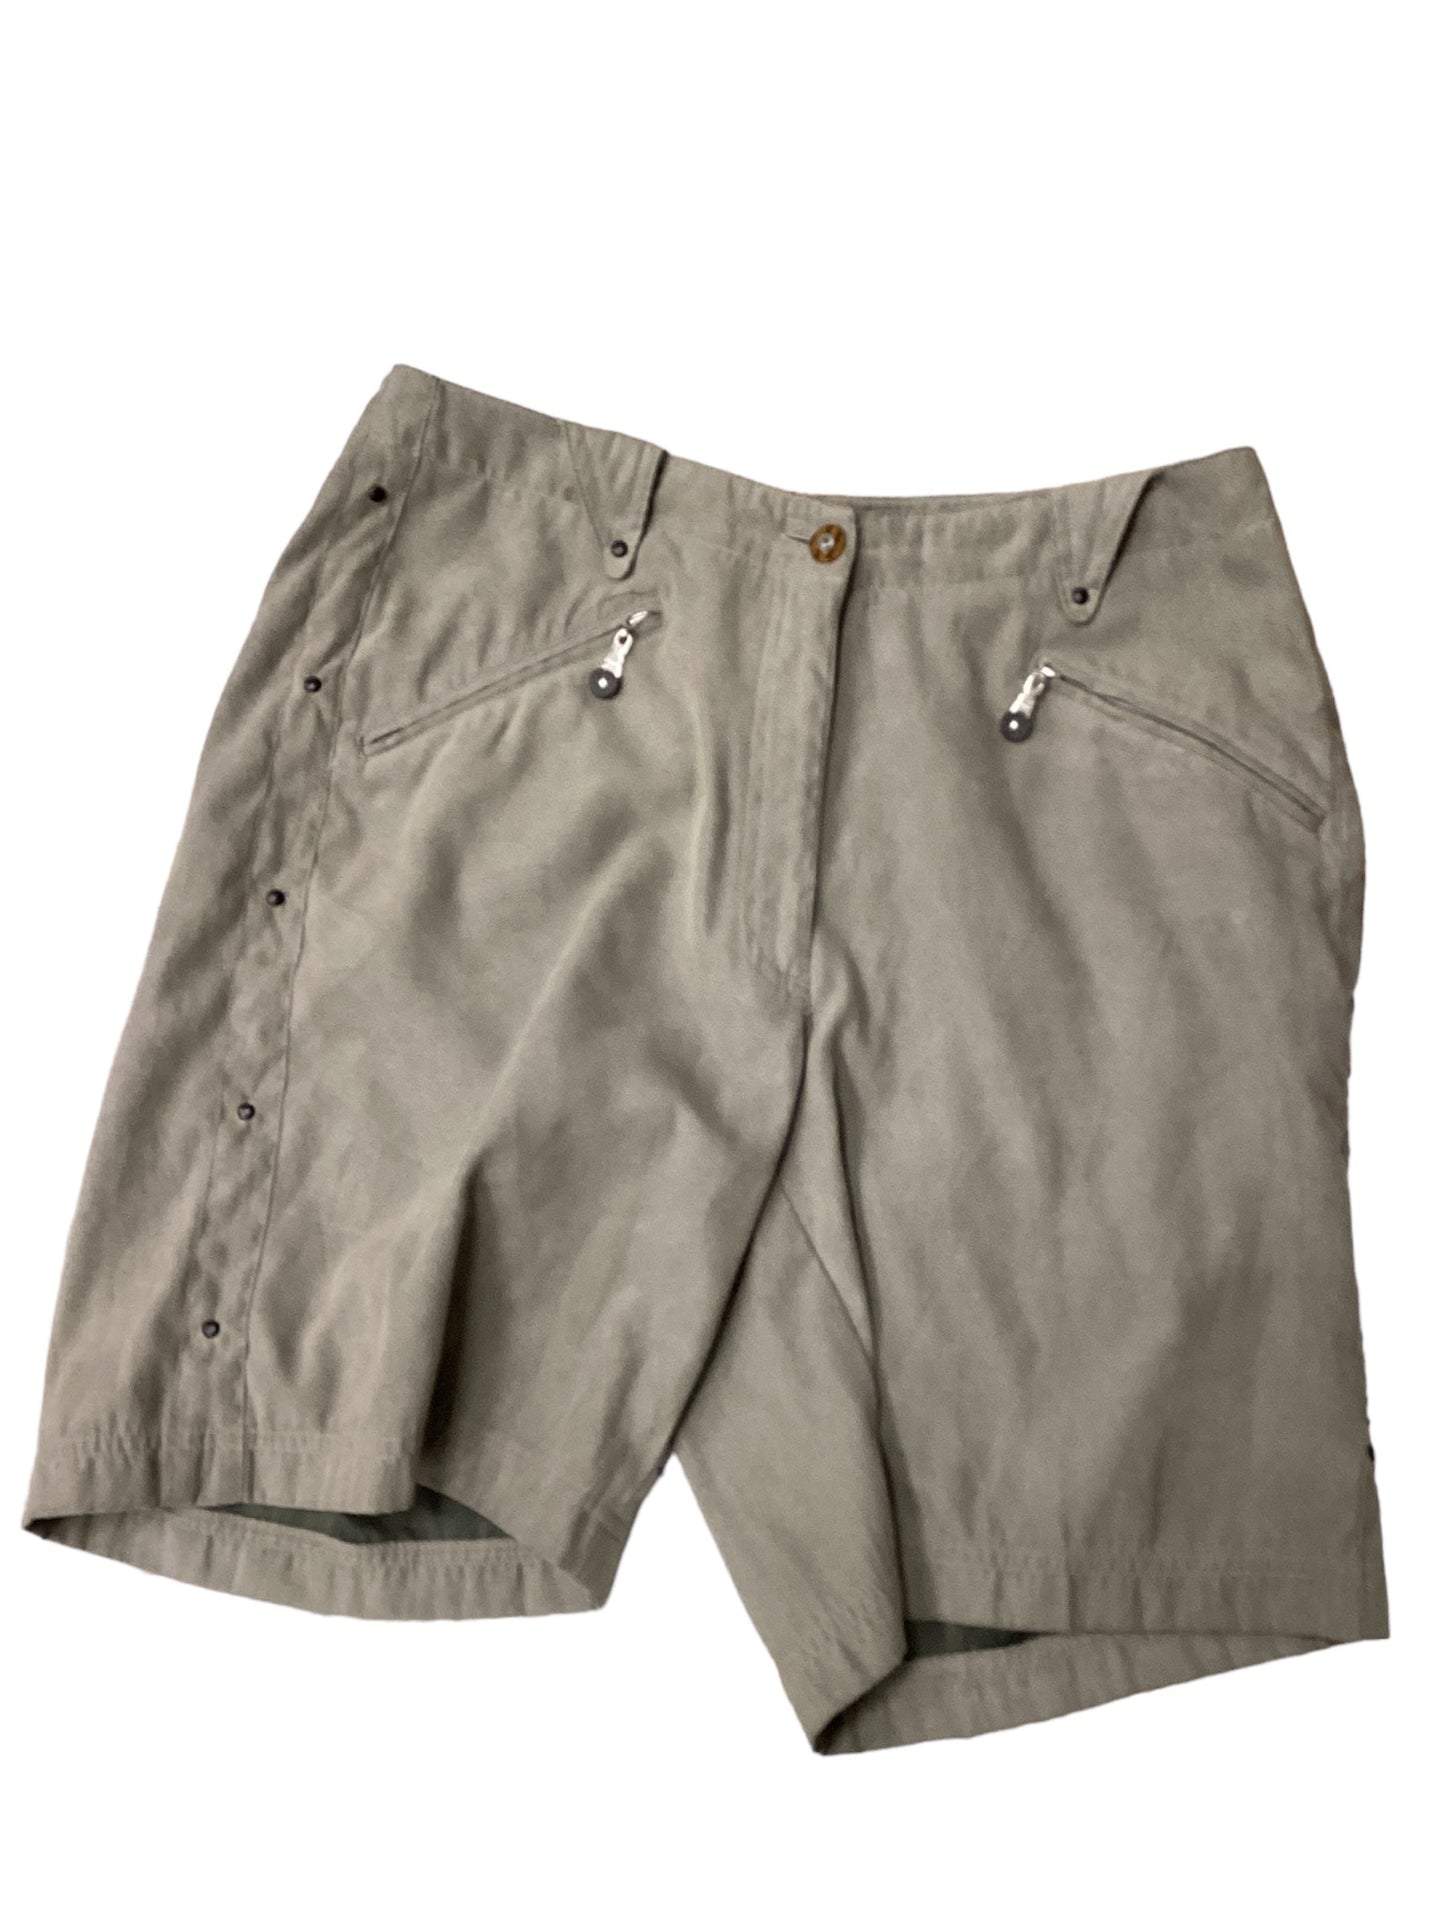 Shorts By Jamie Sadock  Size: 6